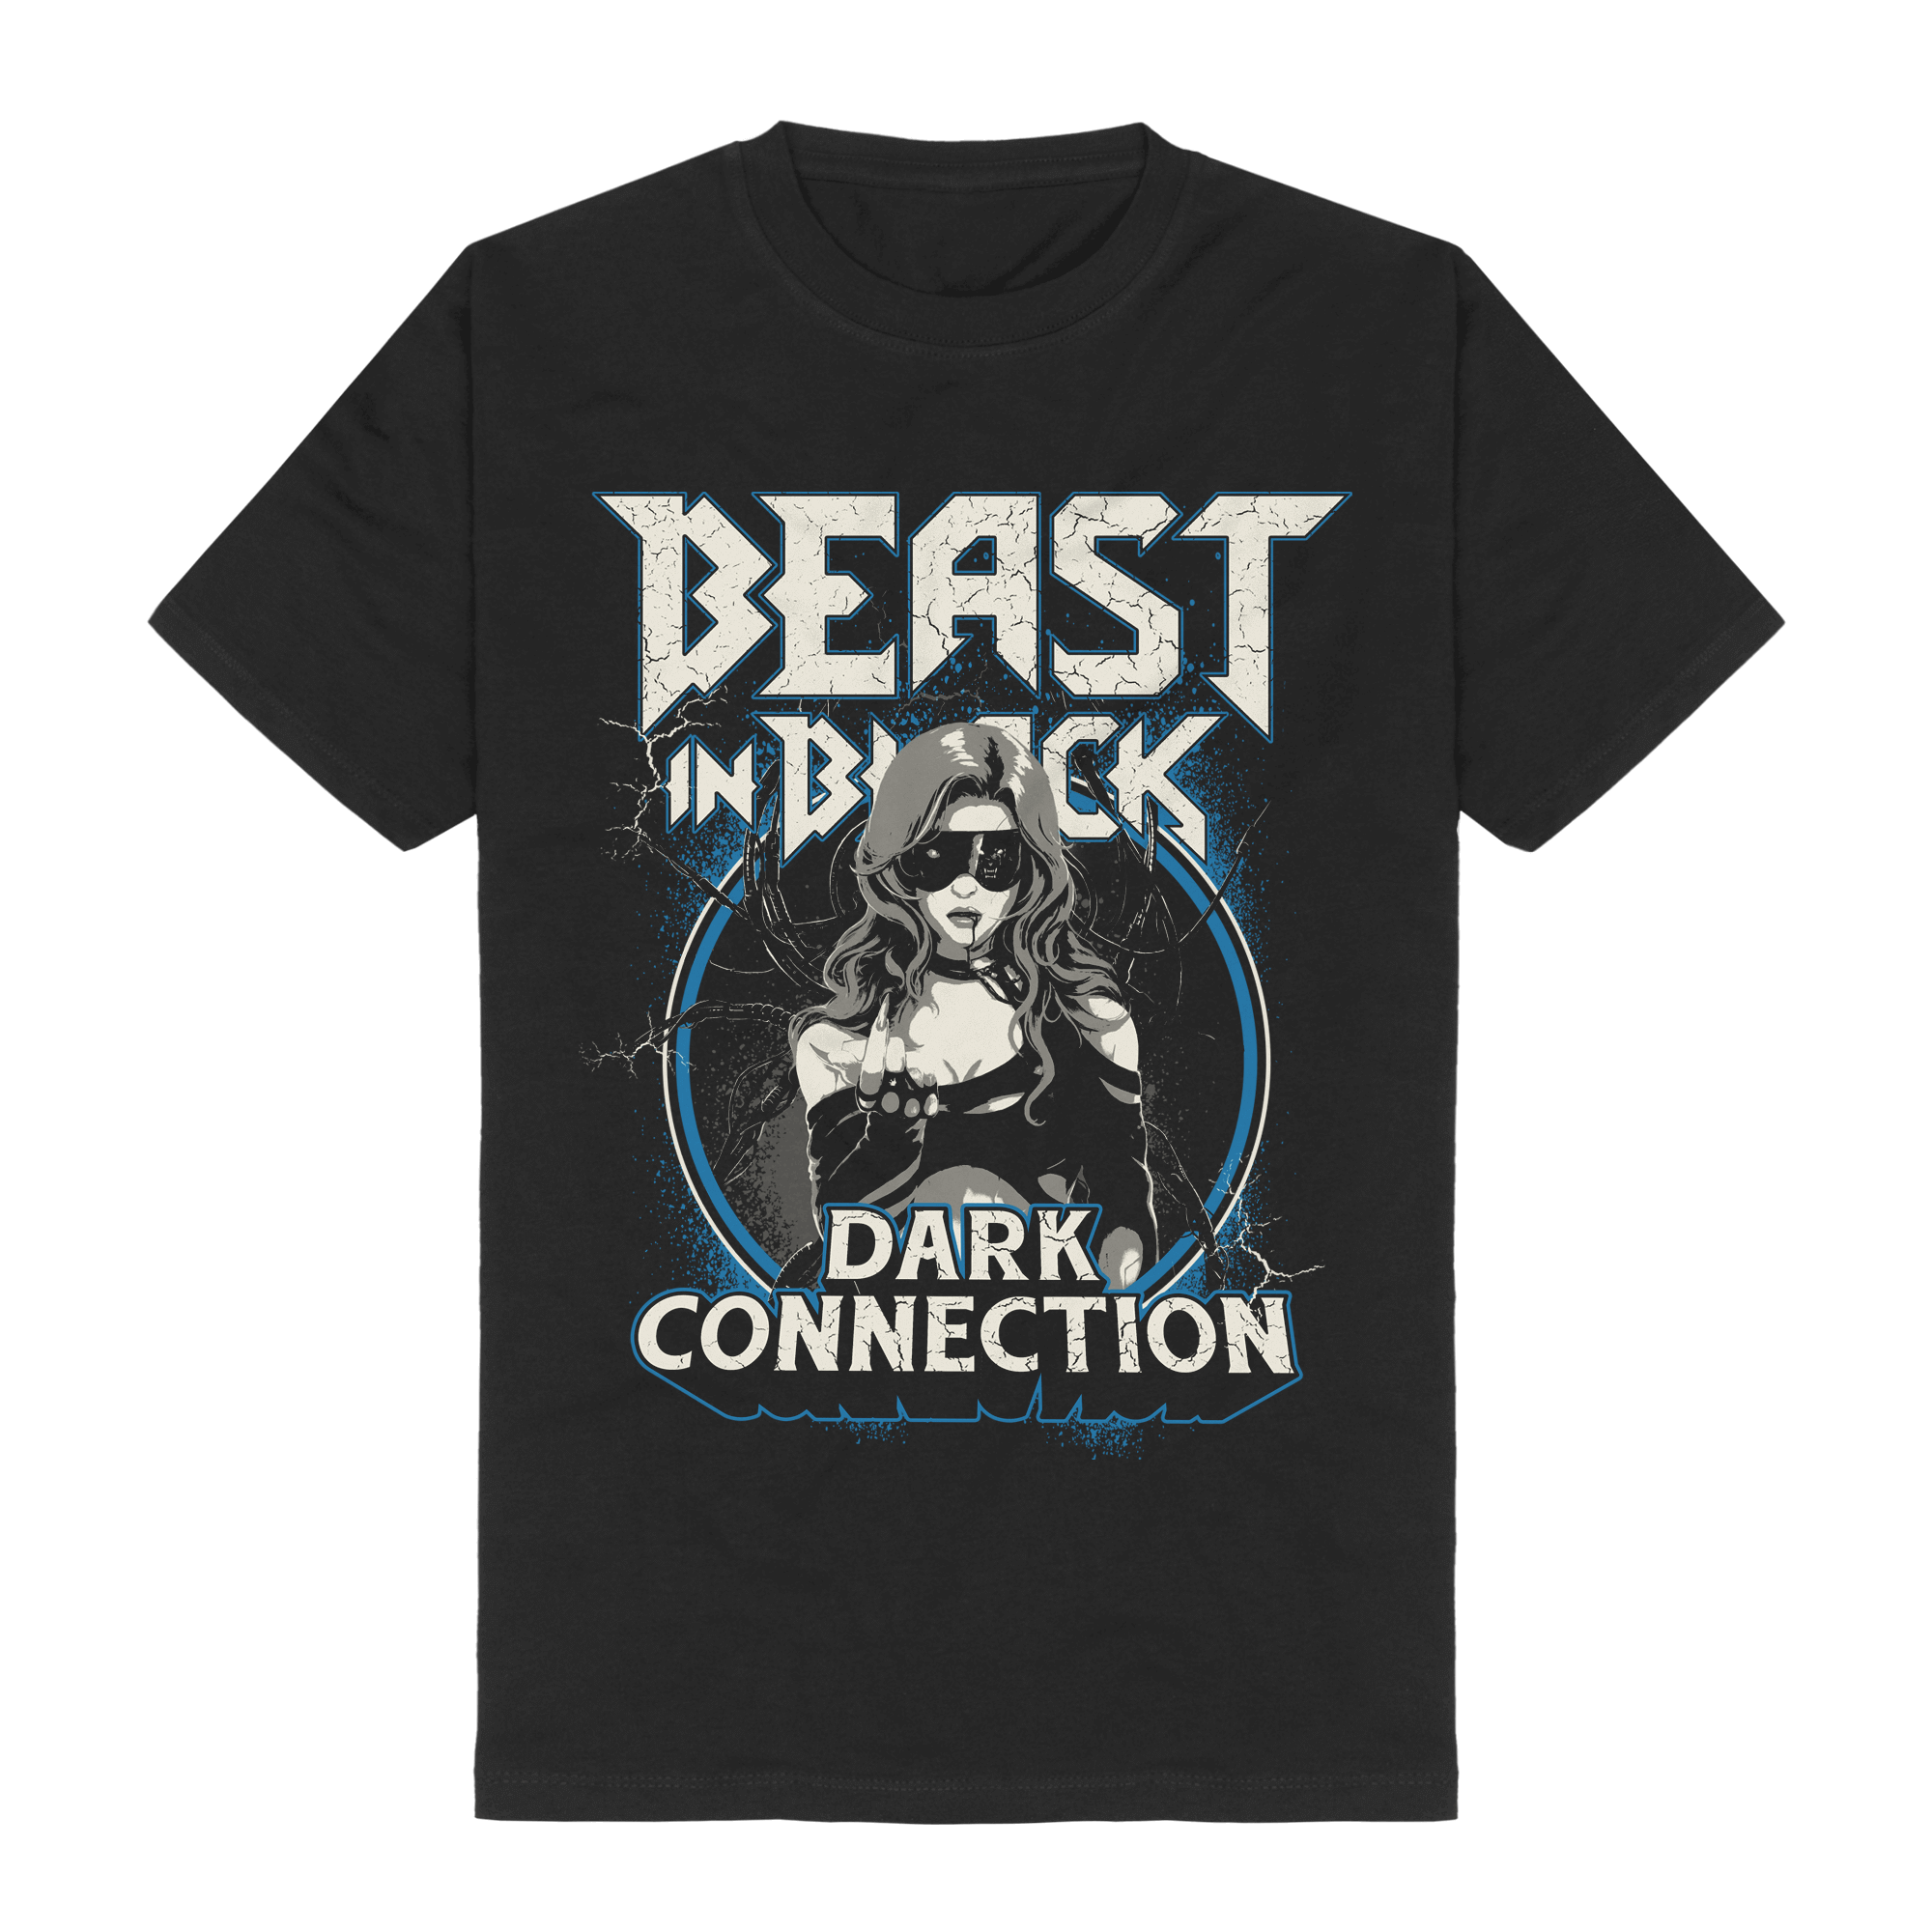 https://images.bravado.de/prod/product-assets/product-asset-data/beast-in-black/beast-in-black/products/140758/web/420865/image-thumb__420865__3000x3000_original/Beast-In-Black-Dark-Connection-Girl-T-Shirt-schwarz-140758-420865.png